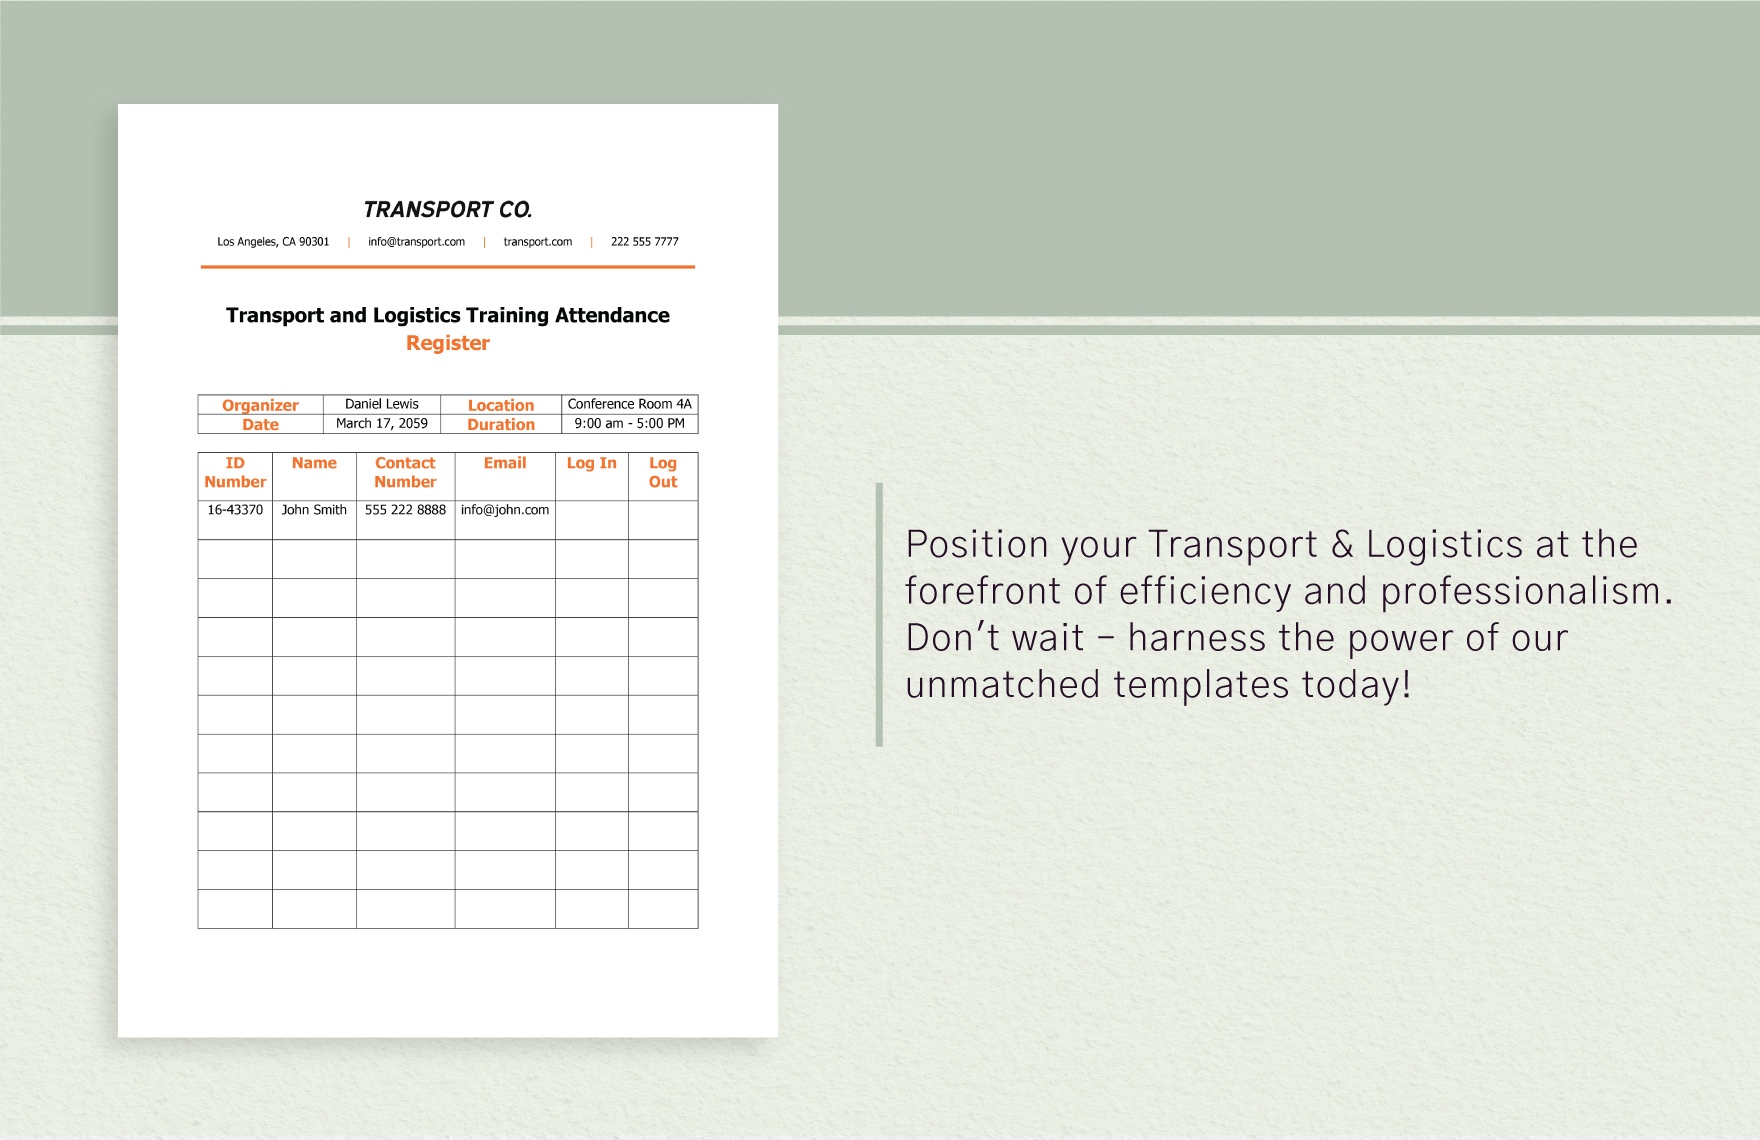 Transport and Logistics Training Attendance Register Template